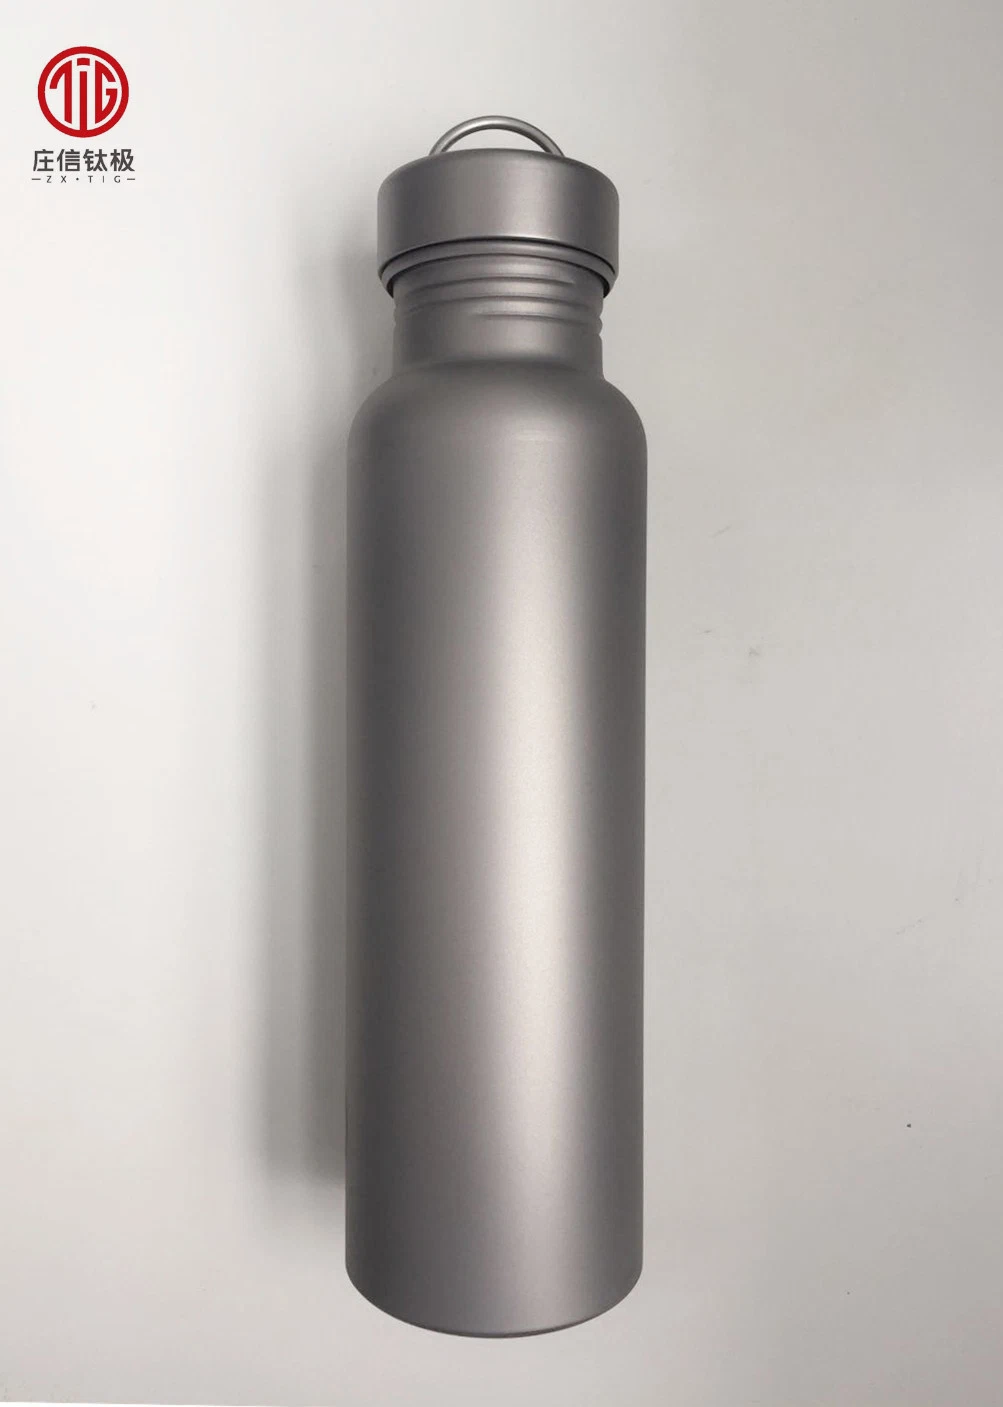 Metal Titanium Sports Water Bottle Manufacturing 400/550/700ml Outdoor Camping